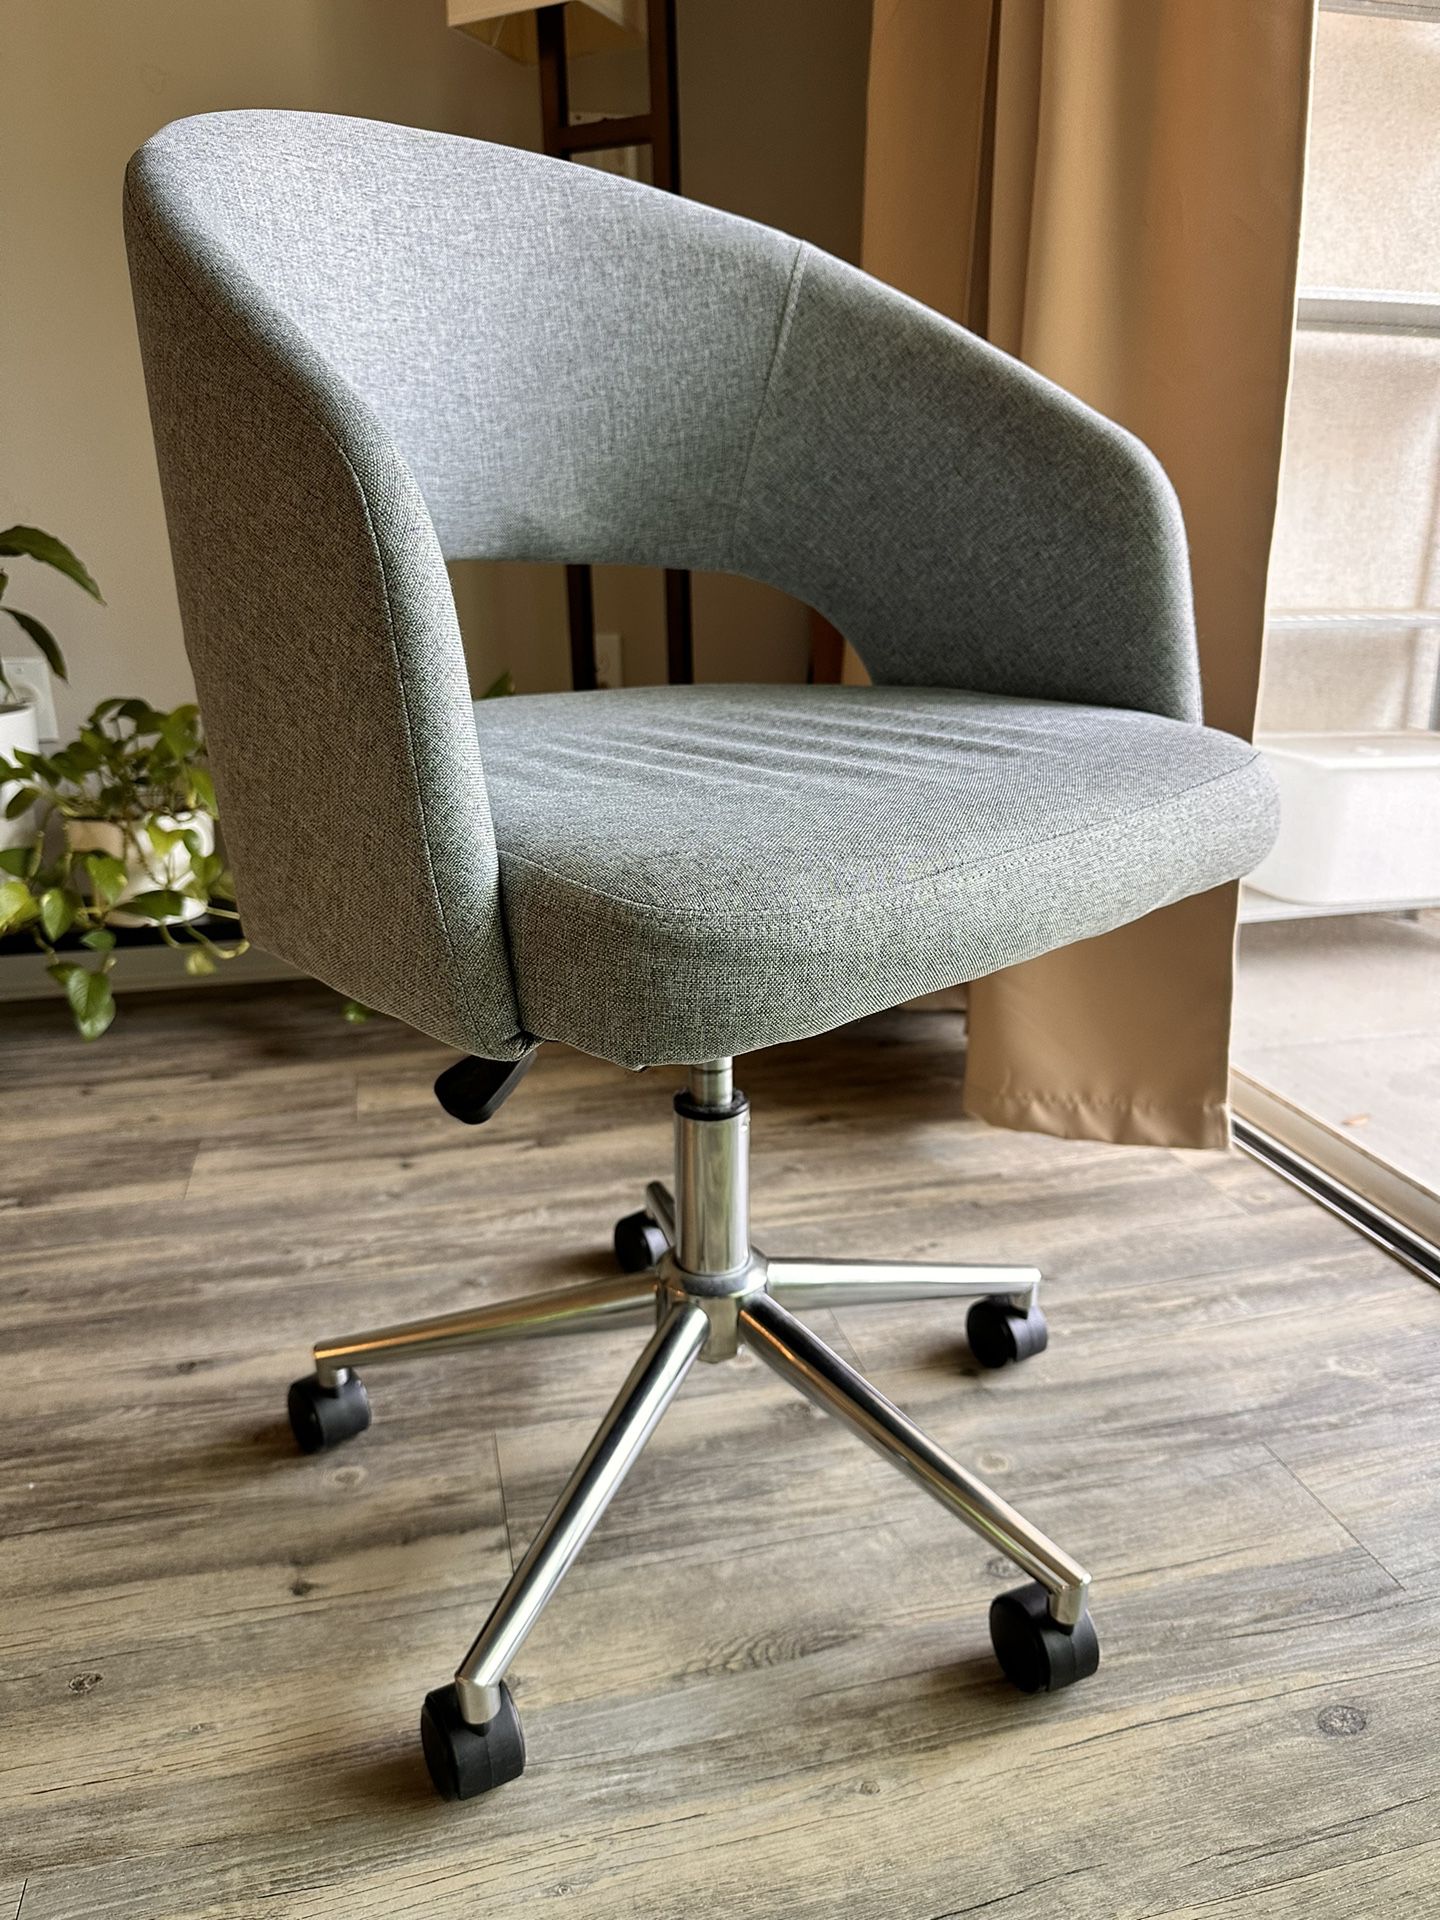 Cozy Desk Chair - Gray